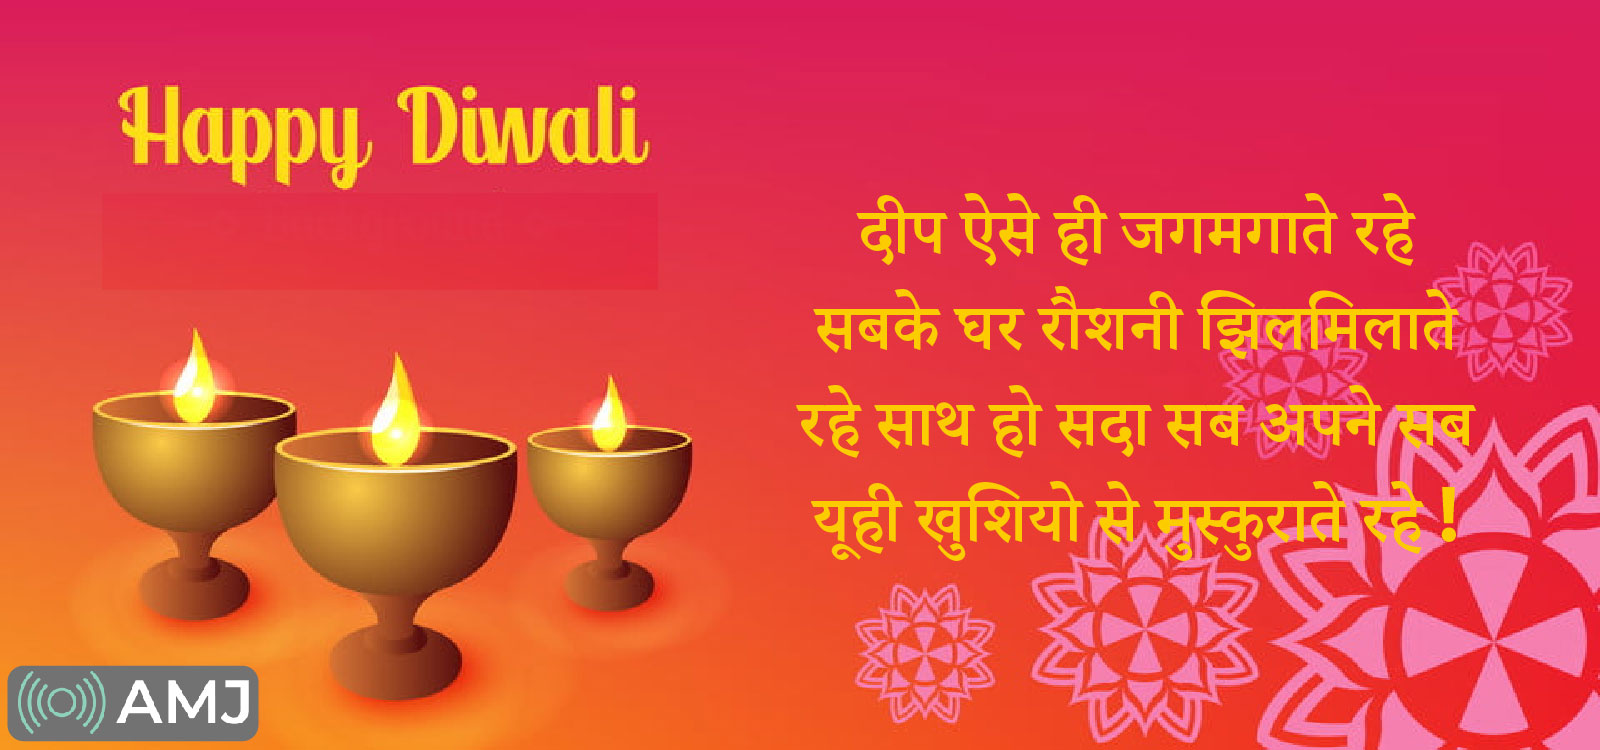 Happy Diwali Shayari for Friends & Family